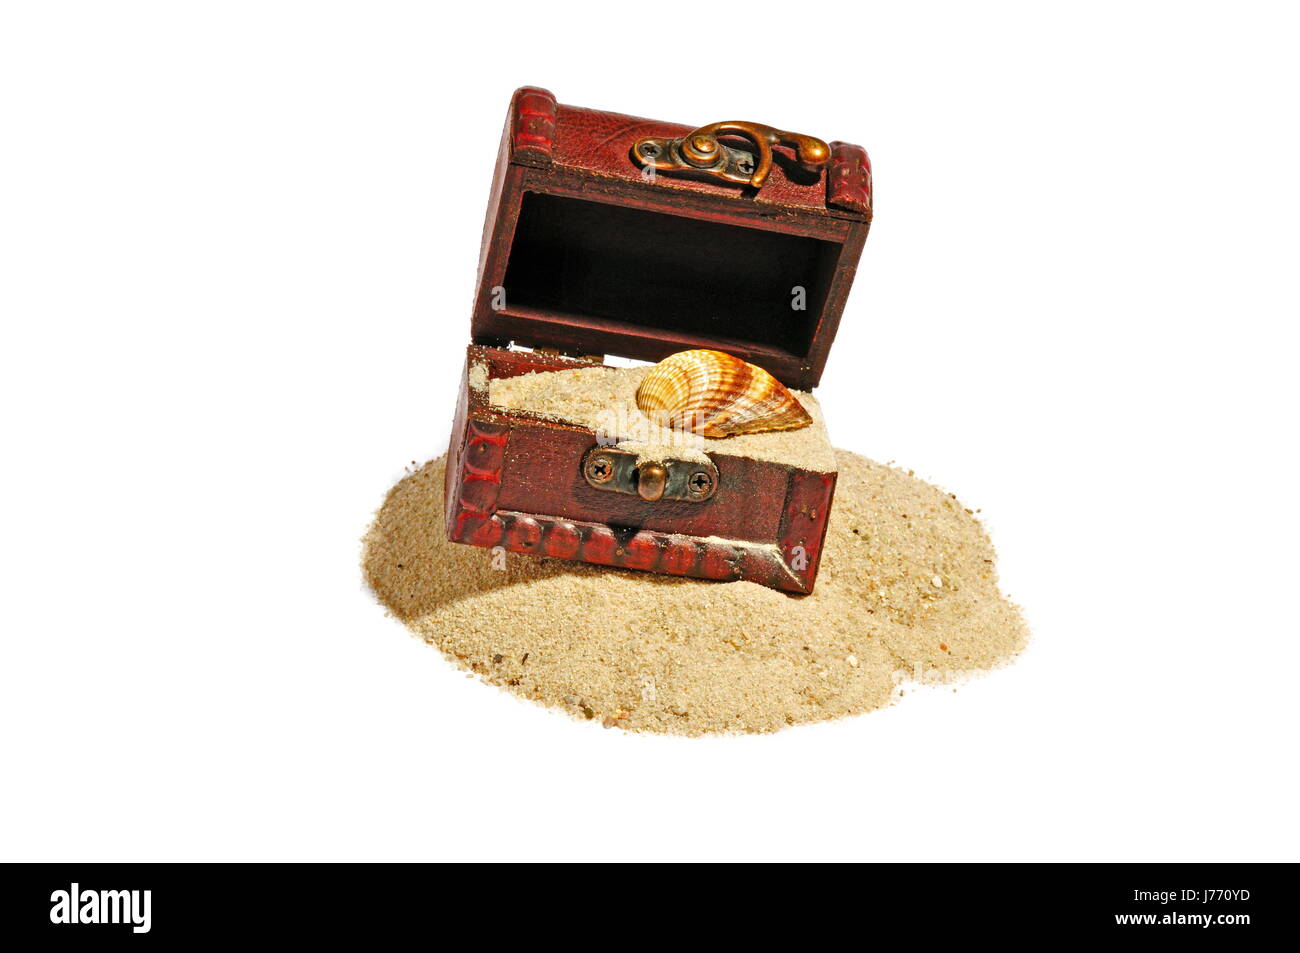 isolierte Piraten Schatz Brust Sand Sand Shell isolated optional ausblenden Piraten Stockfoto